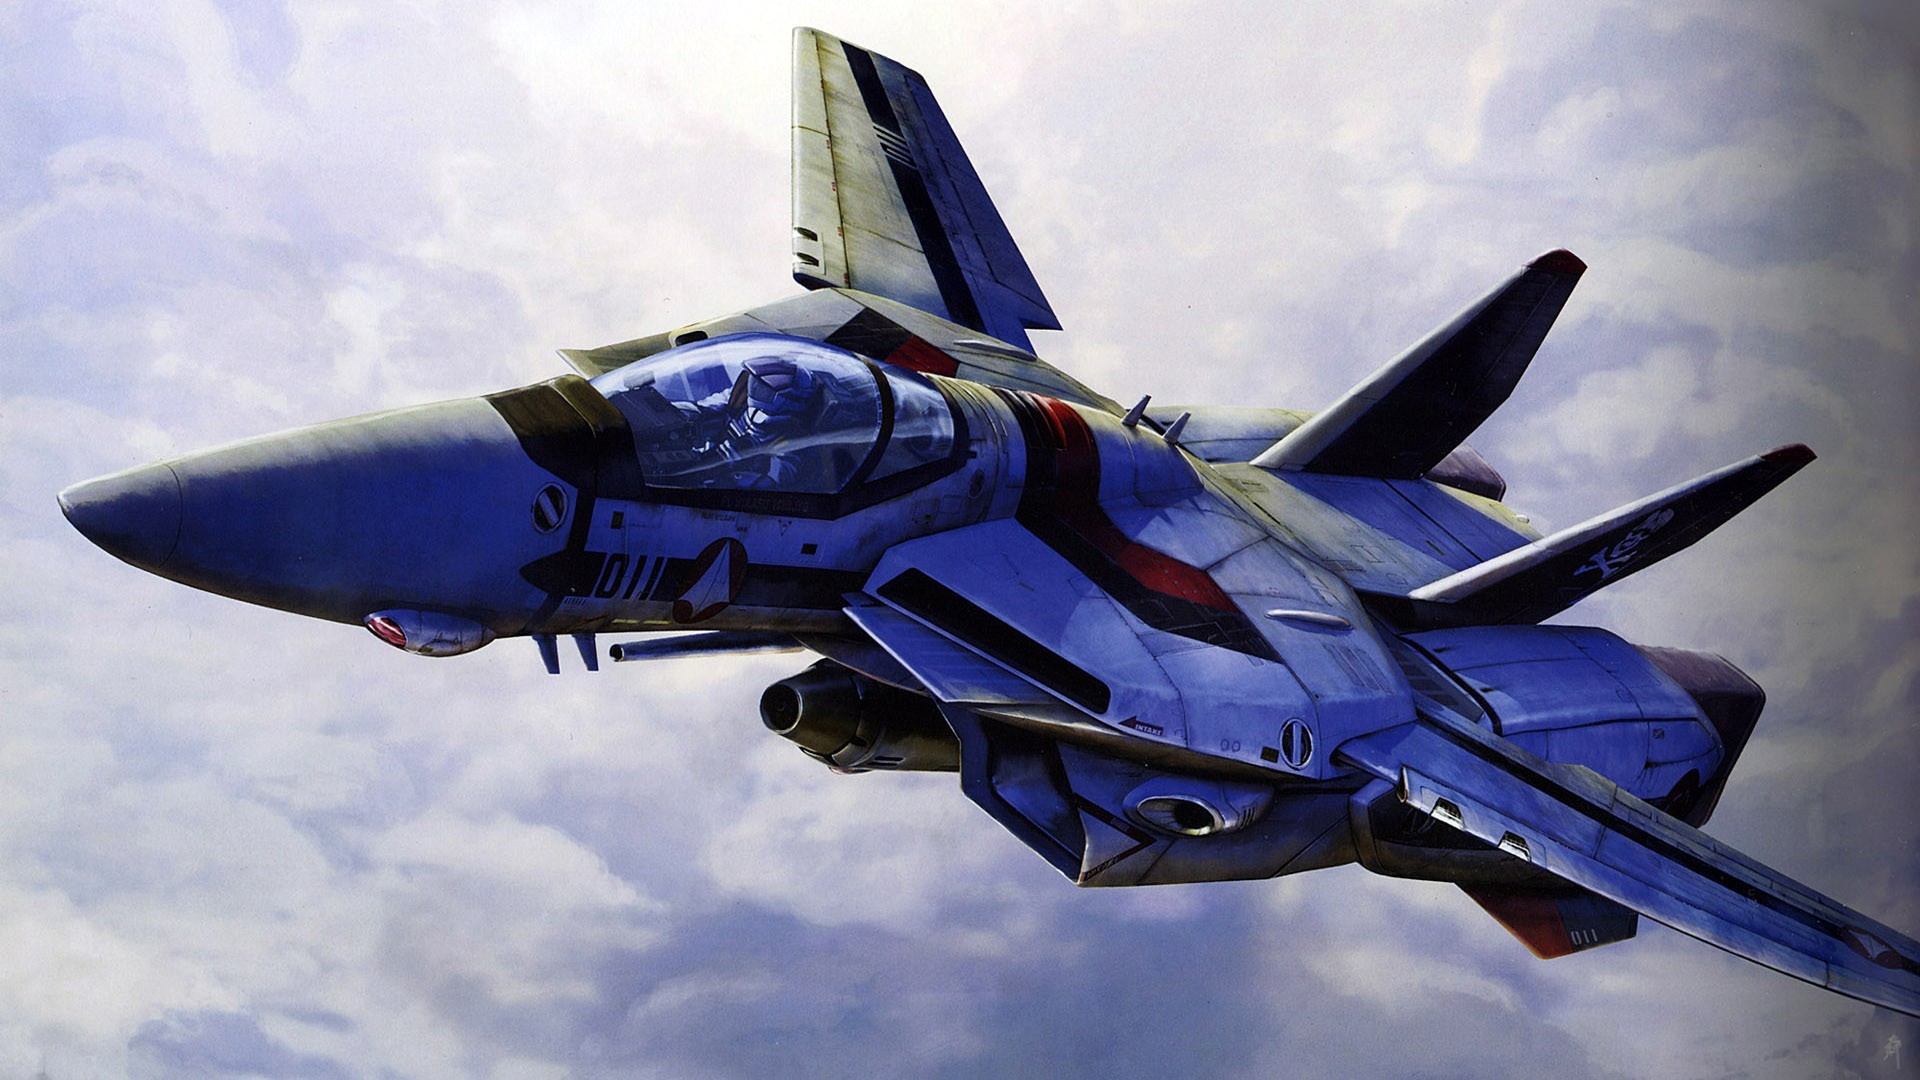 Wallpaper Anime Robot Vehicle Airplane Blue Military